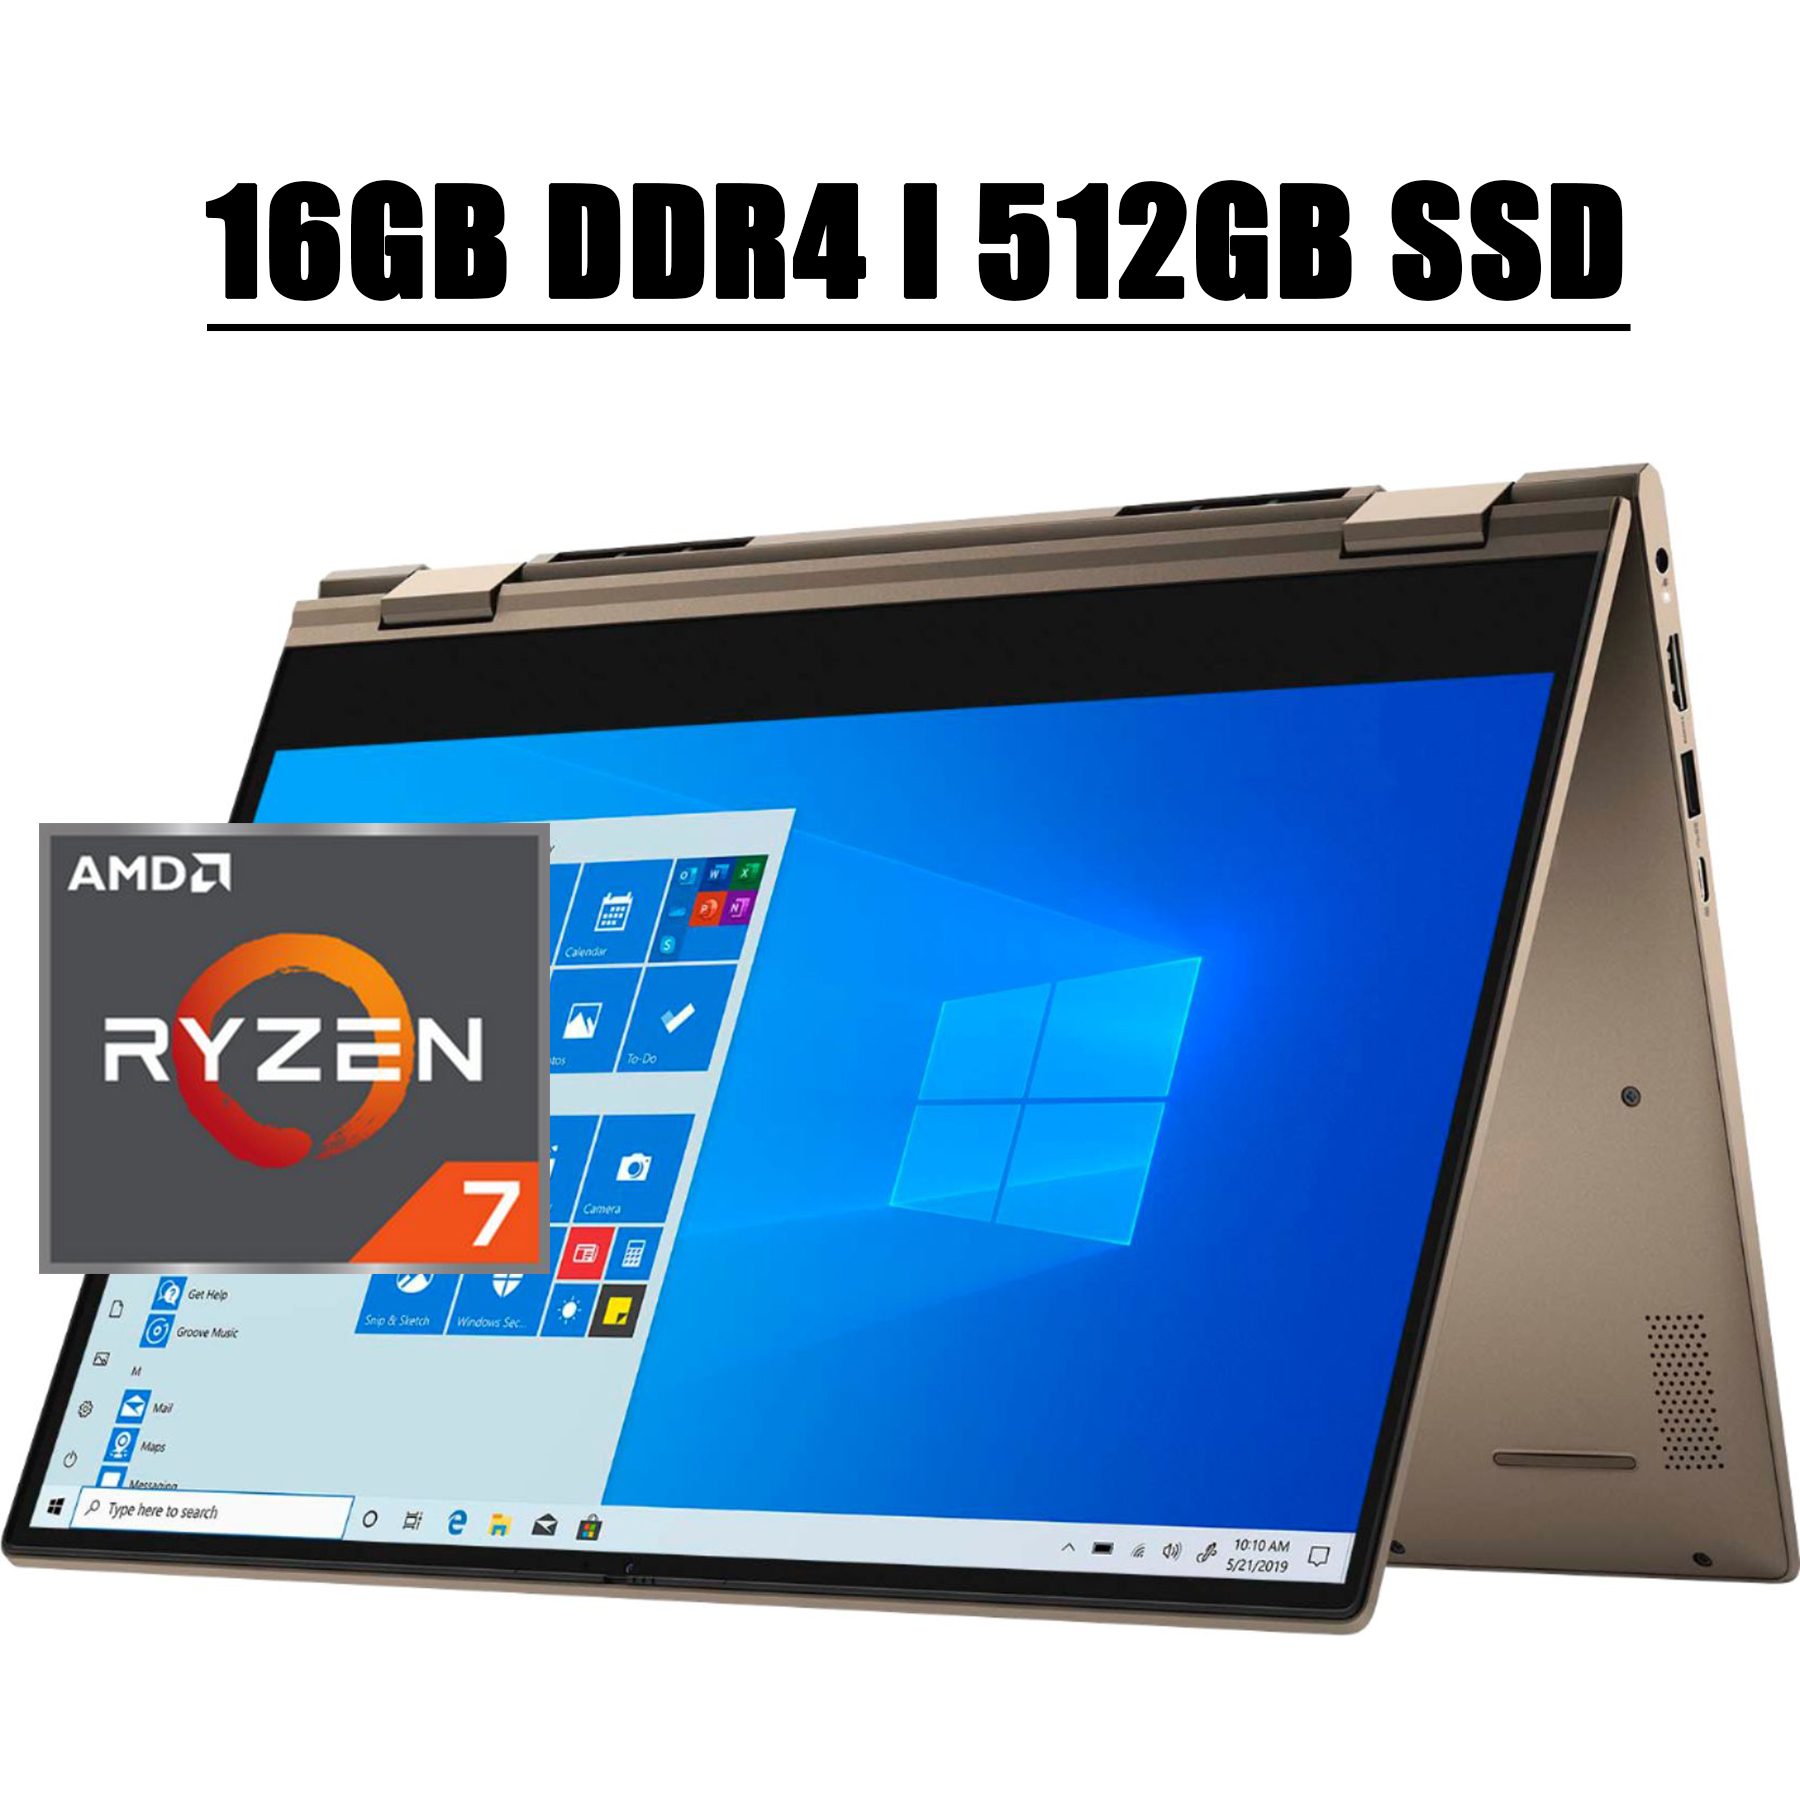 Dell Inspiron 14 7000 2020 Premium 2 in 1 Laptop Computer I 14"&nbsp;FHD IPS Touchscreen Display I AMD 8-Core Ryzen 7 4700U I 16GB DDR4 512GB SSD I Alexa&nbsp;Backlit Fingerprint Win 10 Pro - image 1 of 8